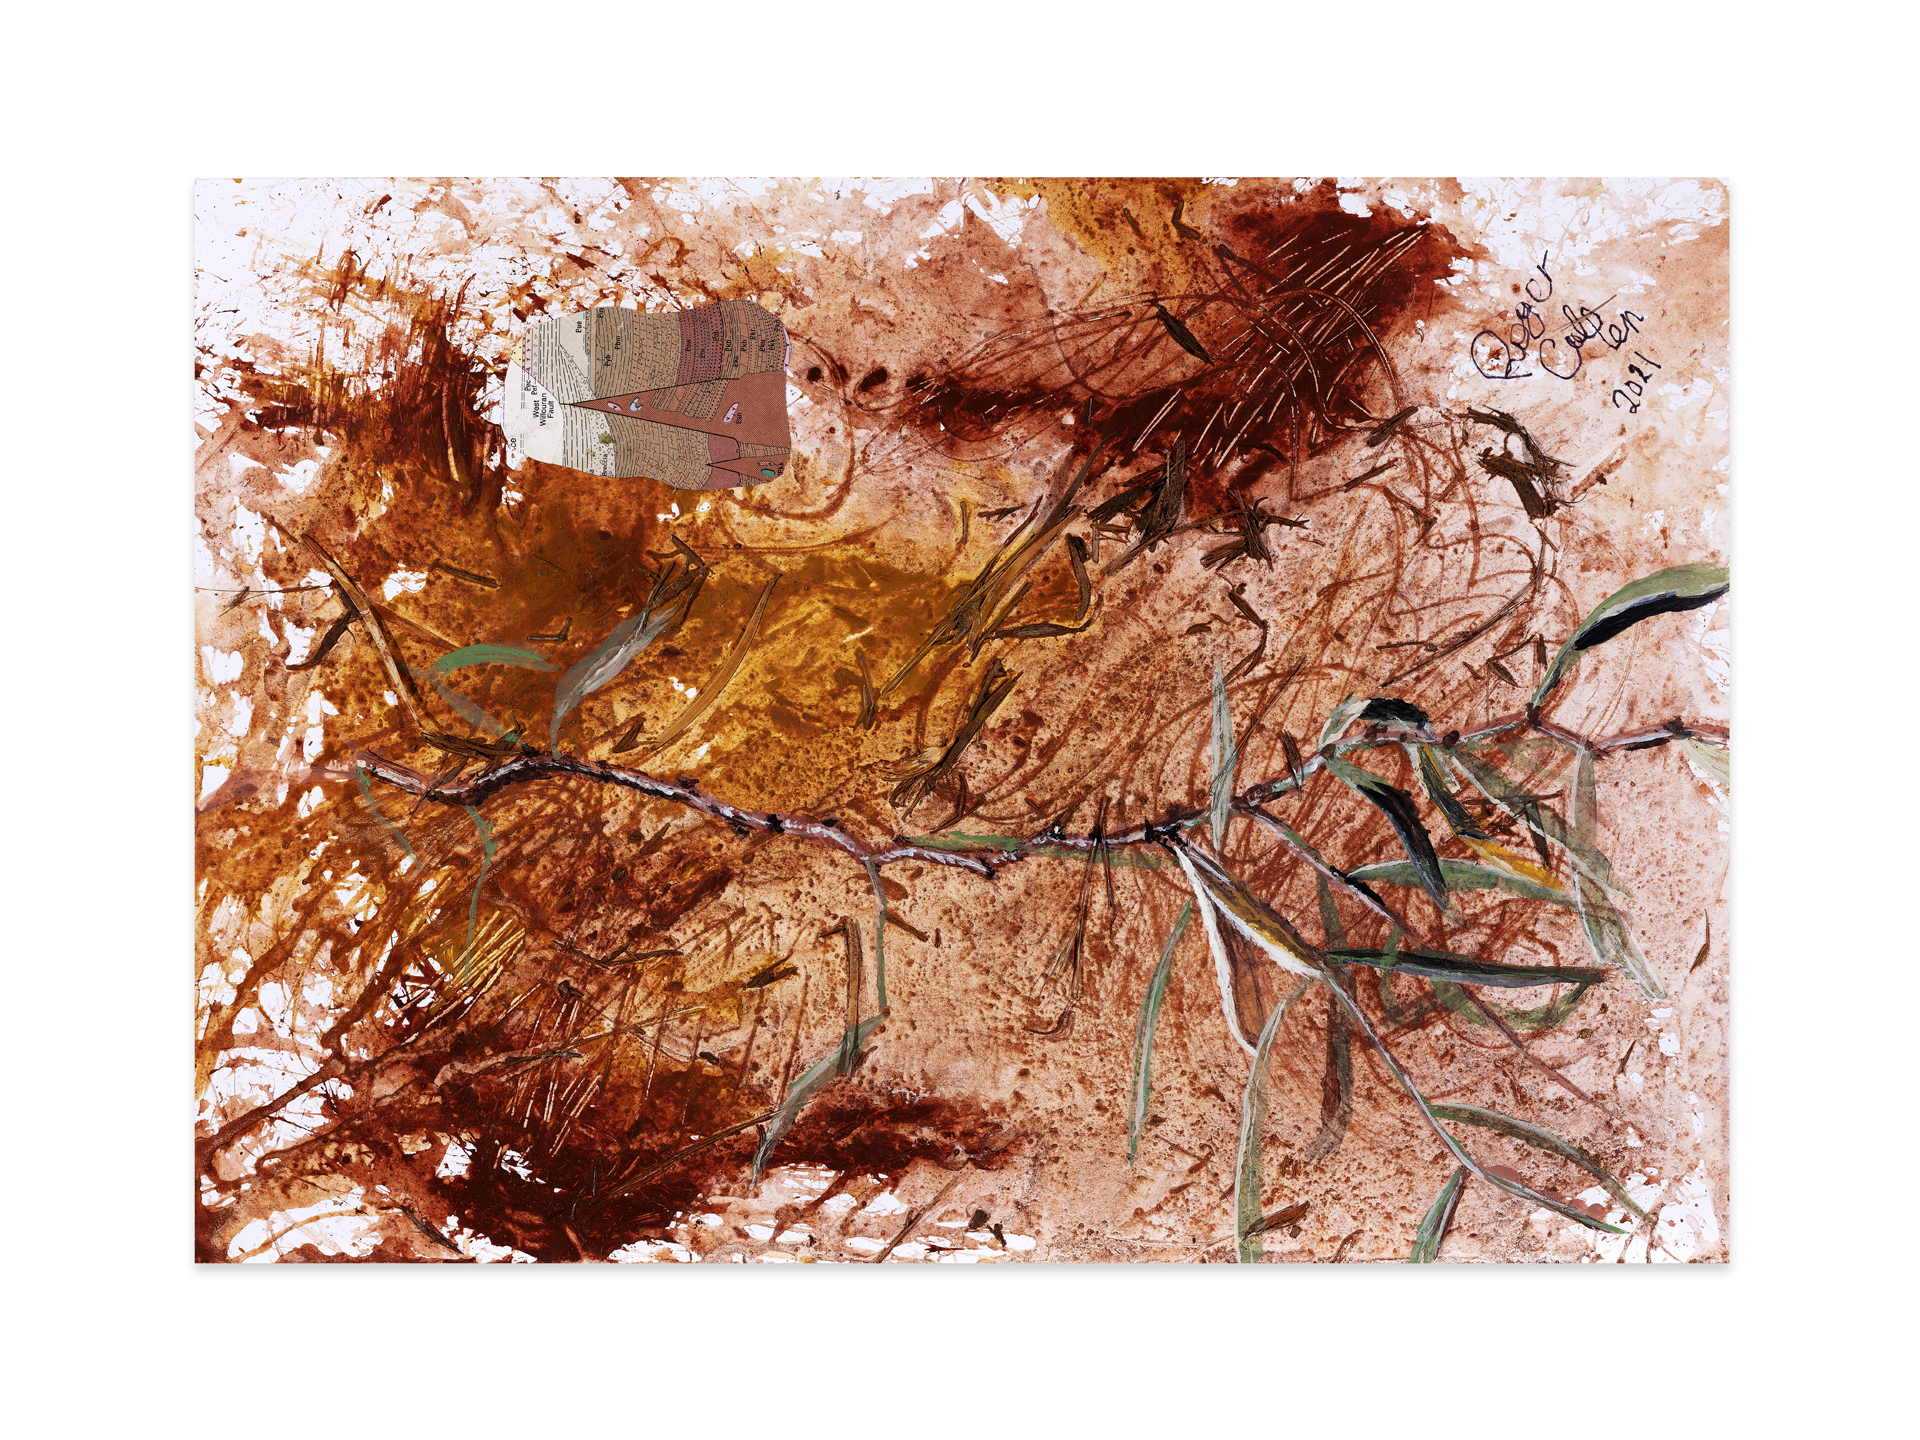 LAKE BINDAGOLLY - Atalaya hemiglauca by Roger A Callen | Lethbridge 20000 2022 Finalists | Lethbridge Gallery